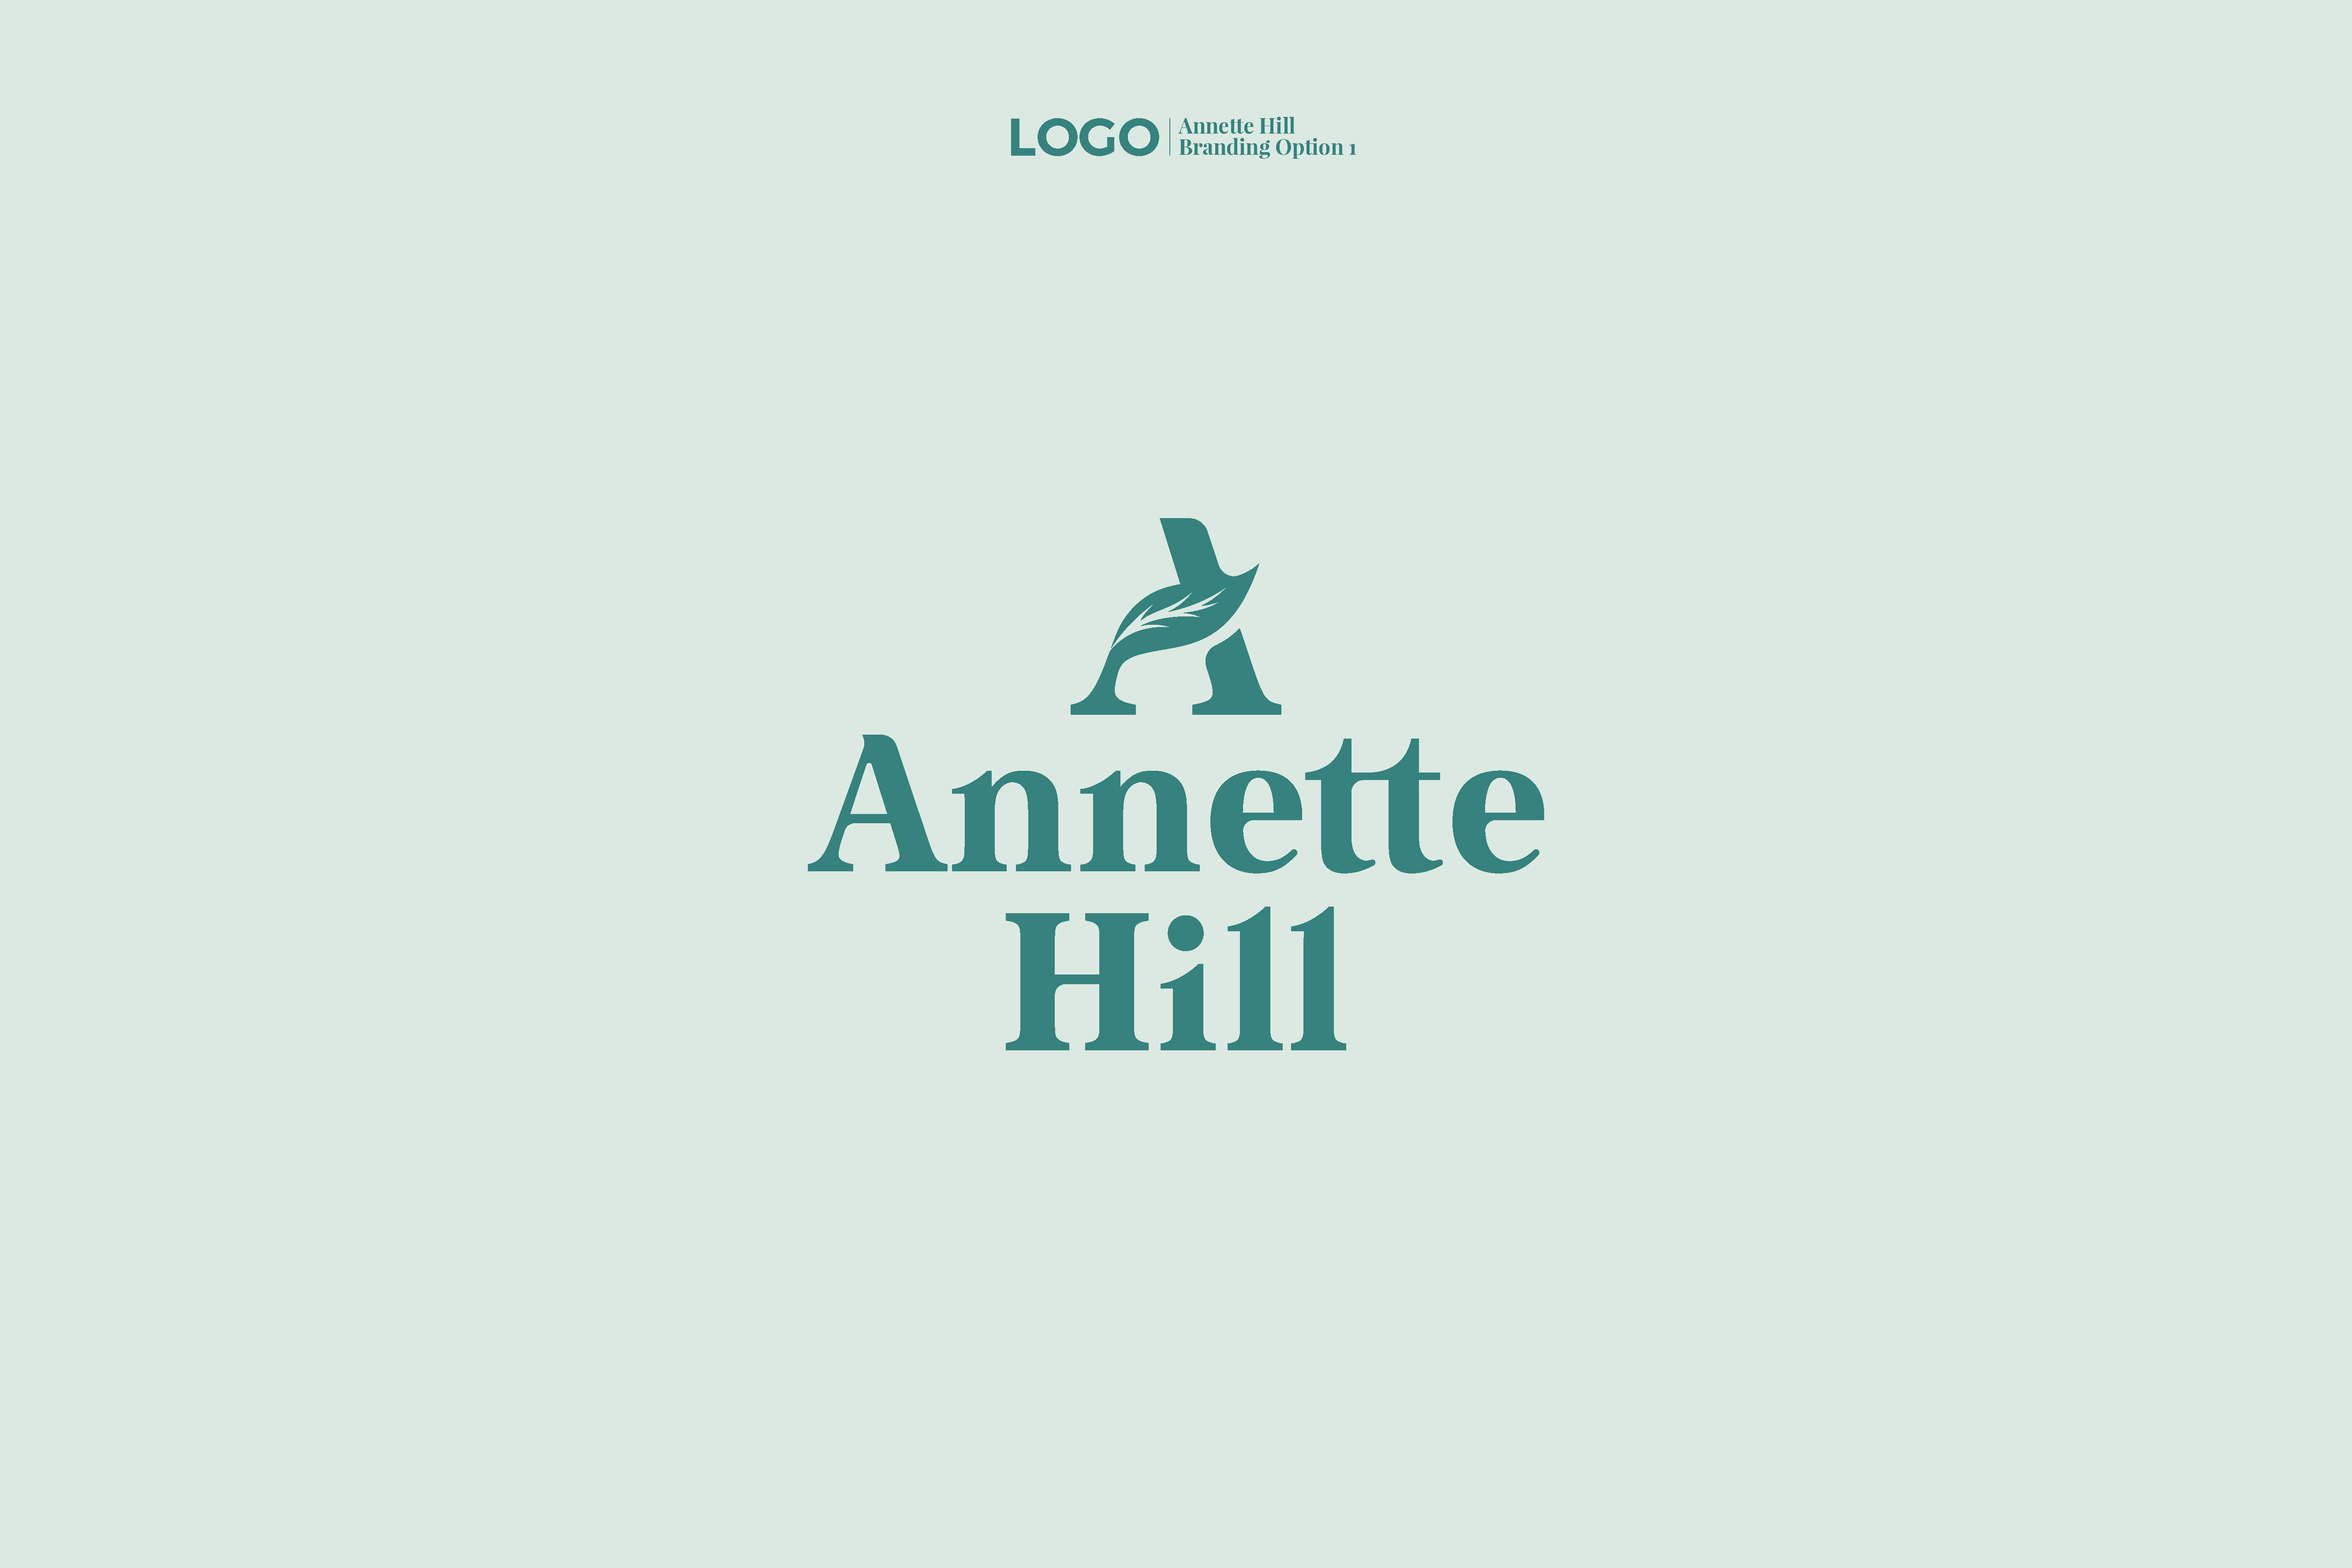 Annette Hill Property Branding by Z Creative Studio Branding & Graphic Design Melbourne